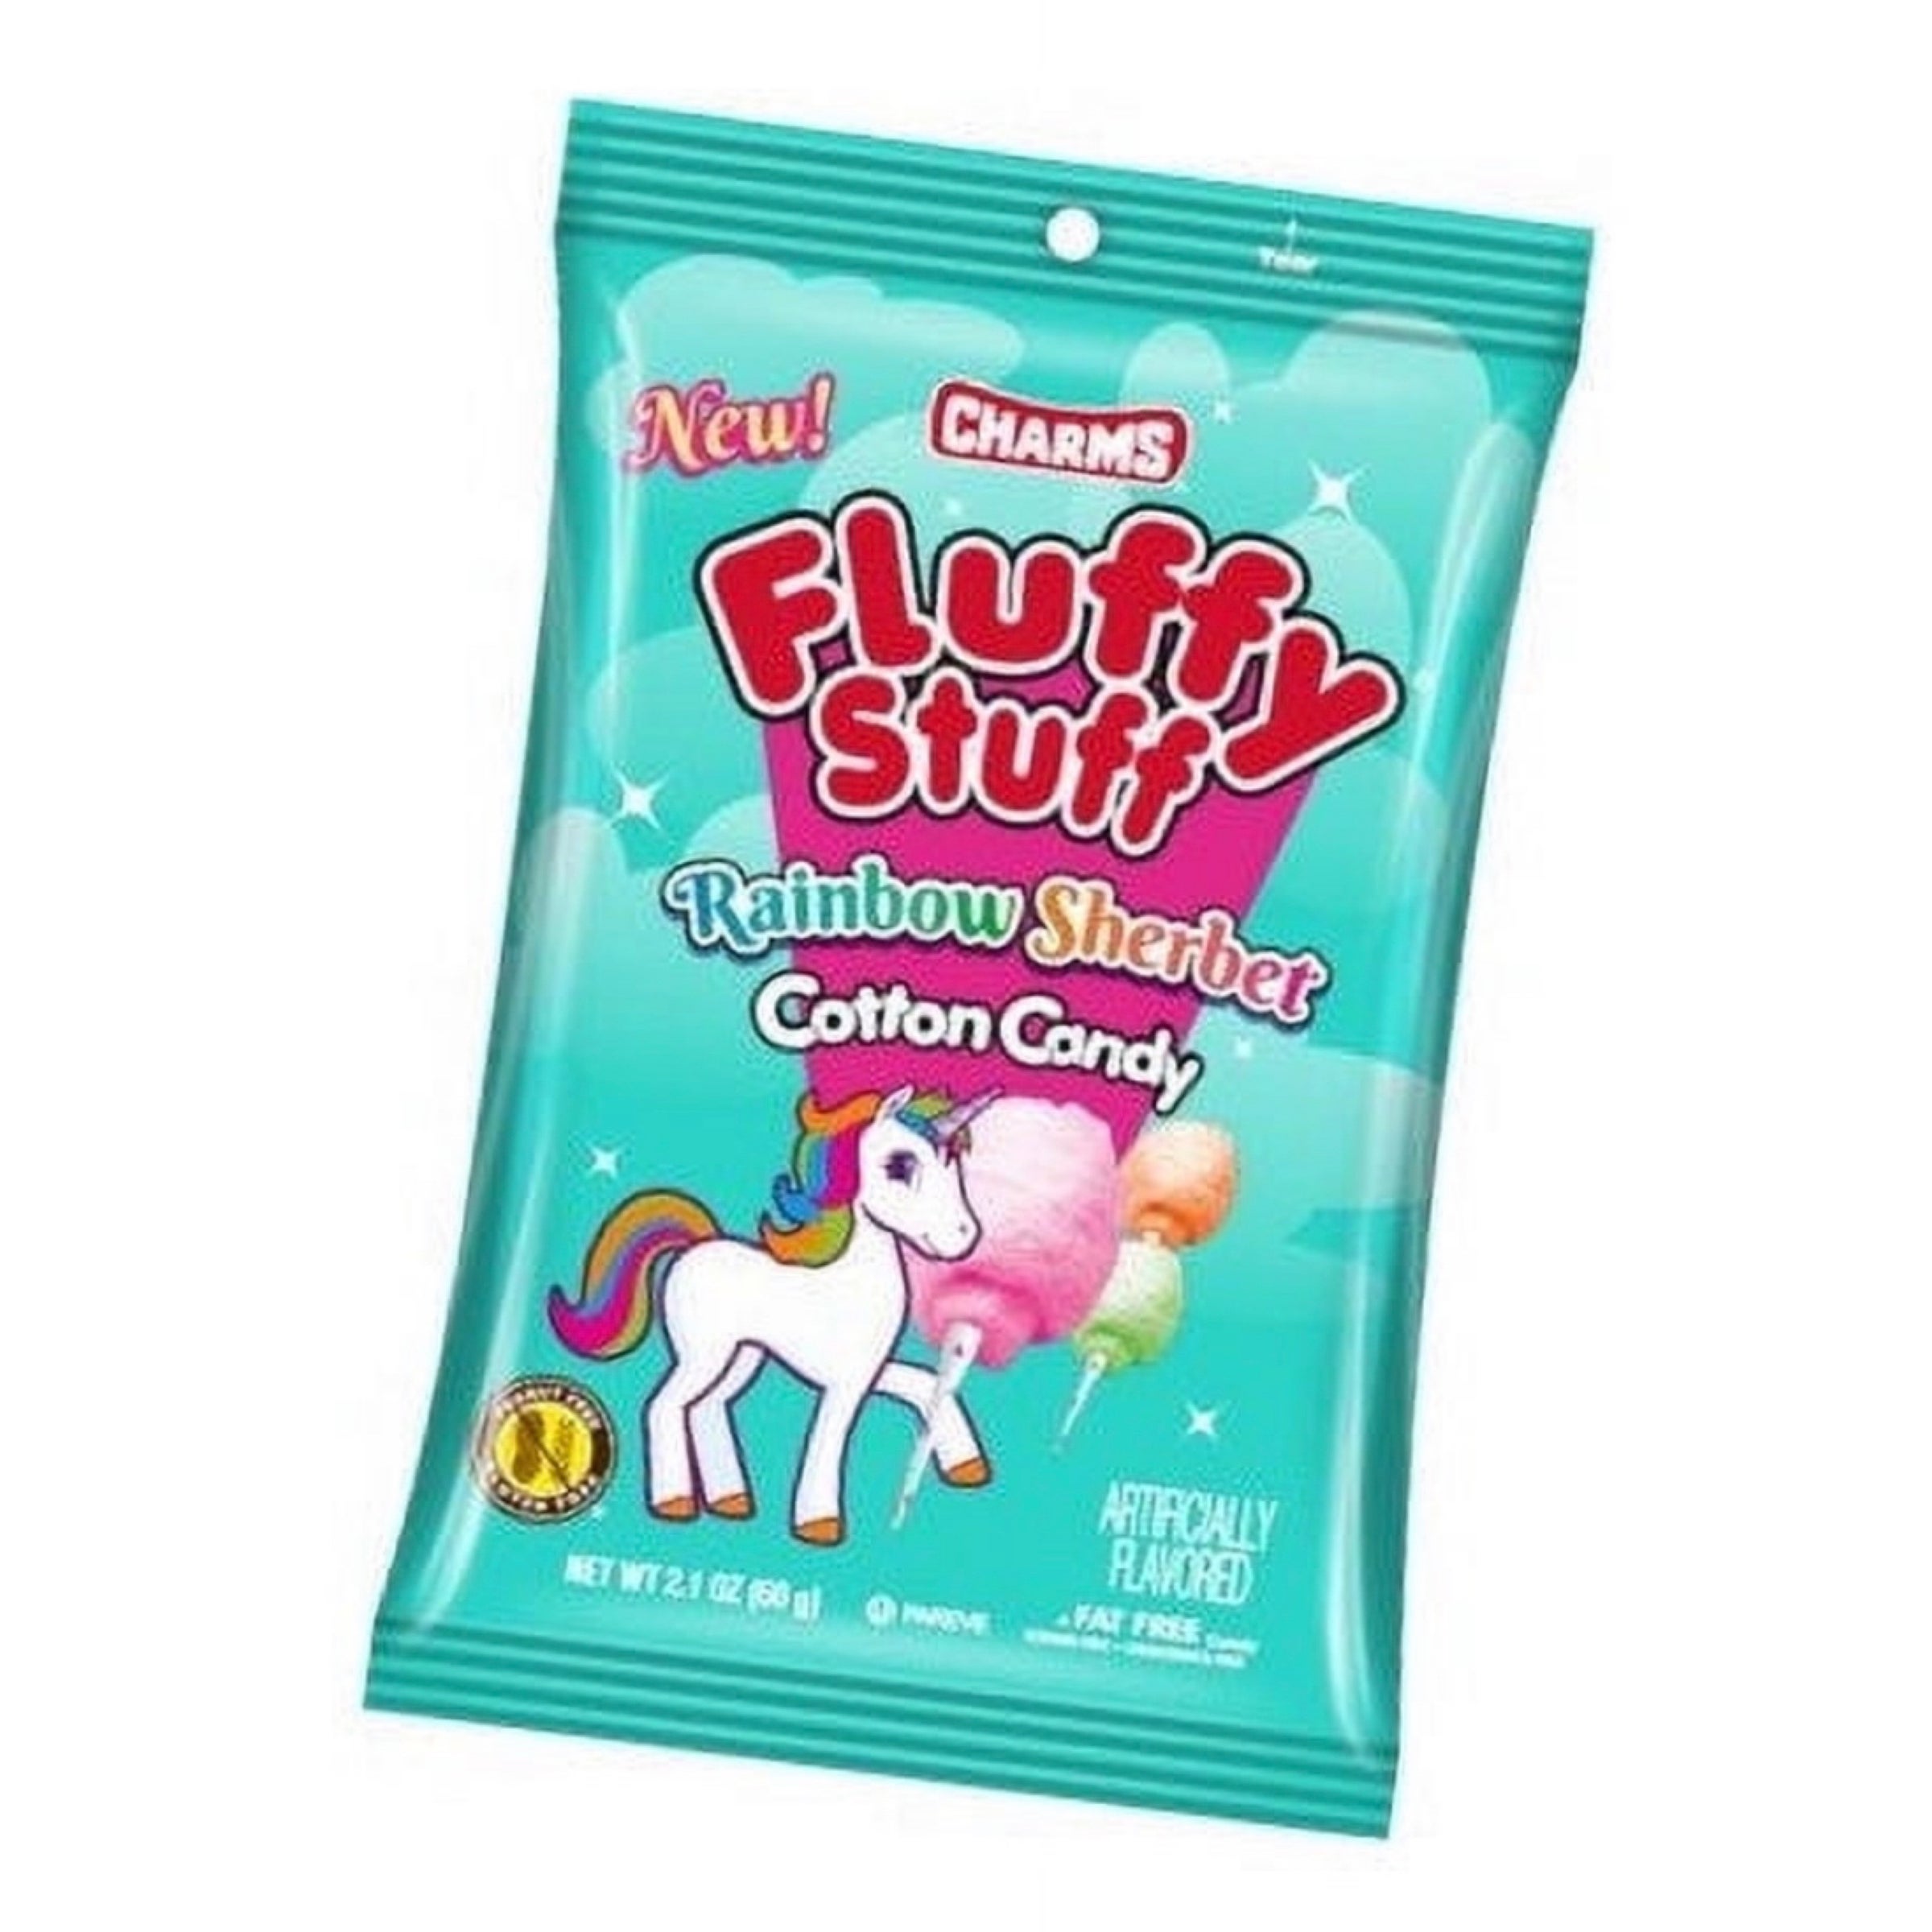 Charms Fluffy Stuff Cotton Candy, Snow Balls, Strawberry - 2.1 oz